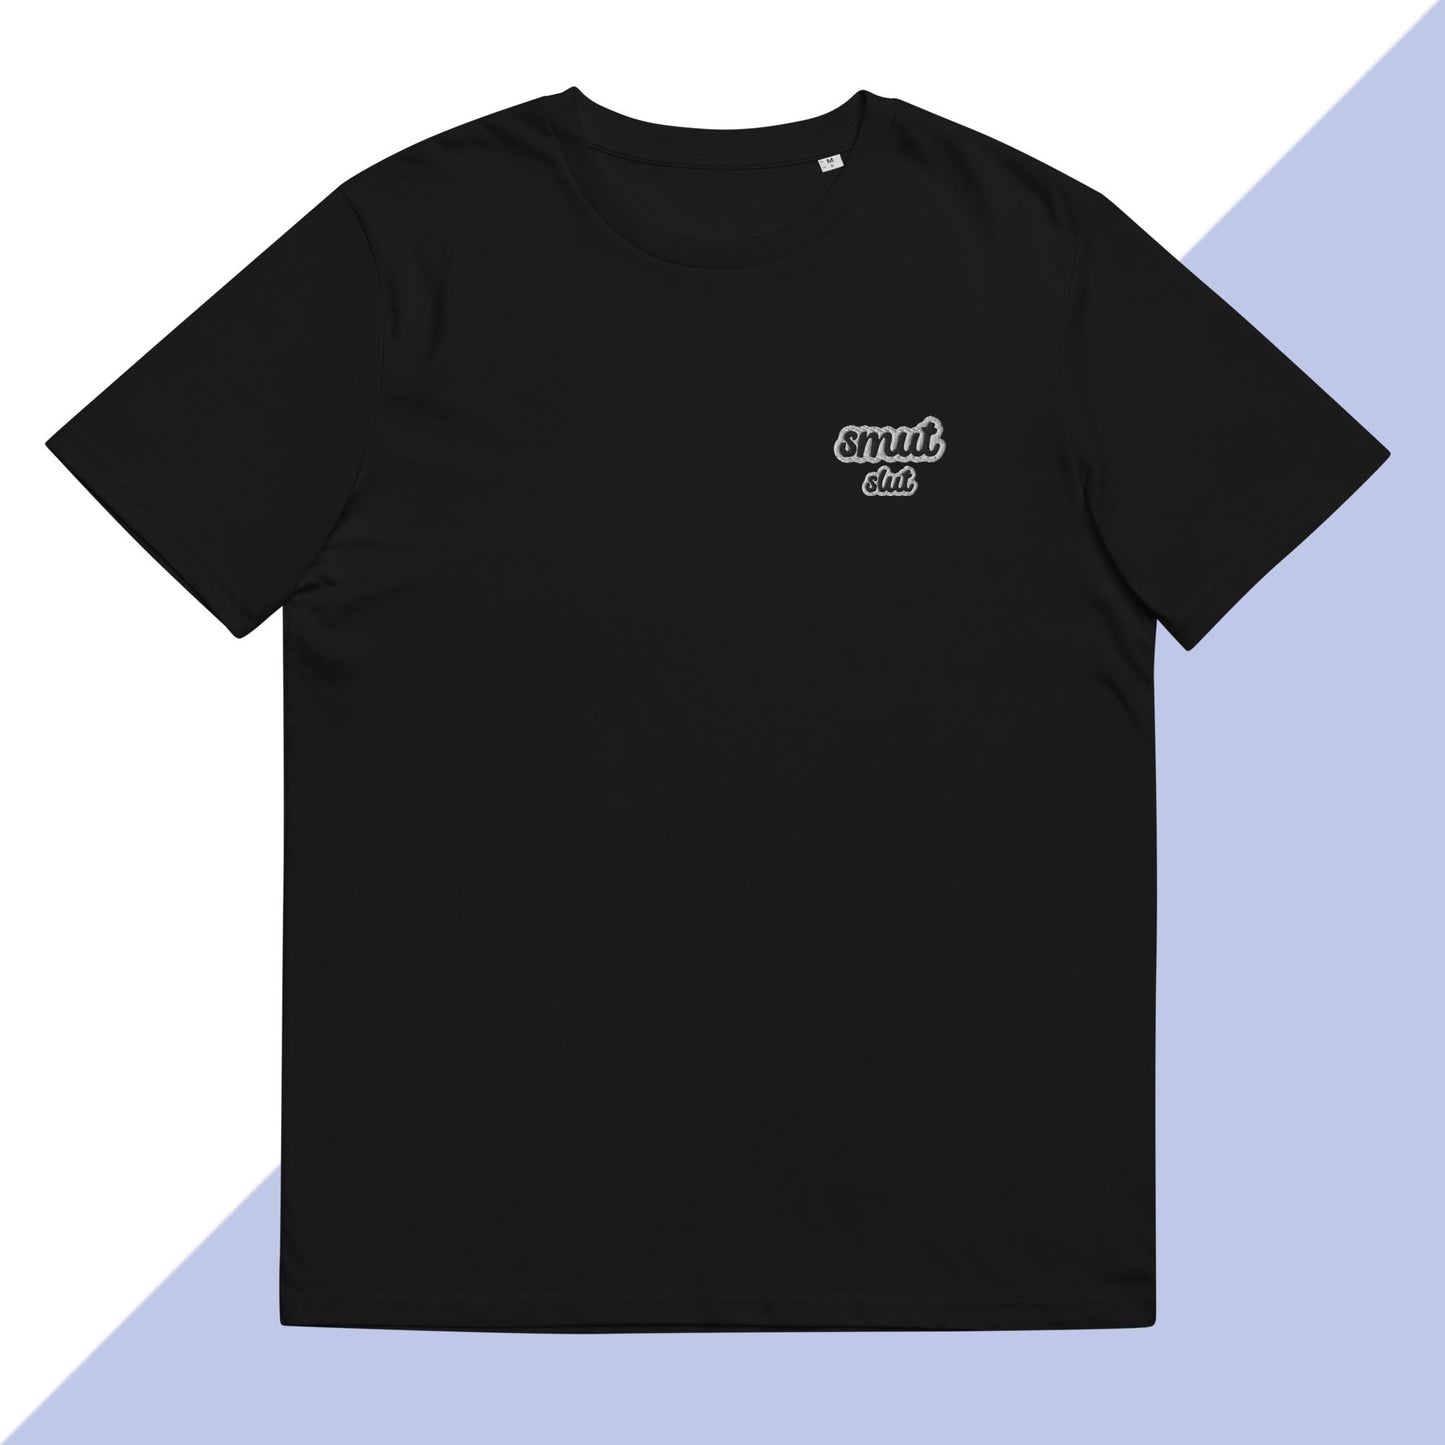 SMUT SLUT - Embroidered Unisex T-Shirt